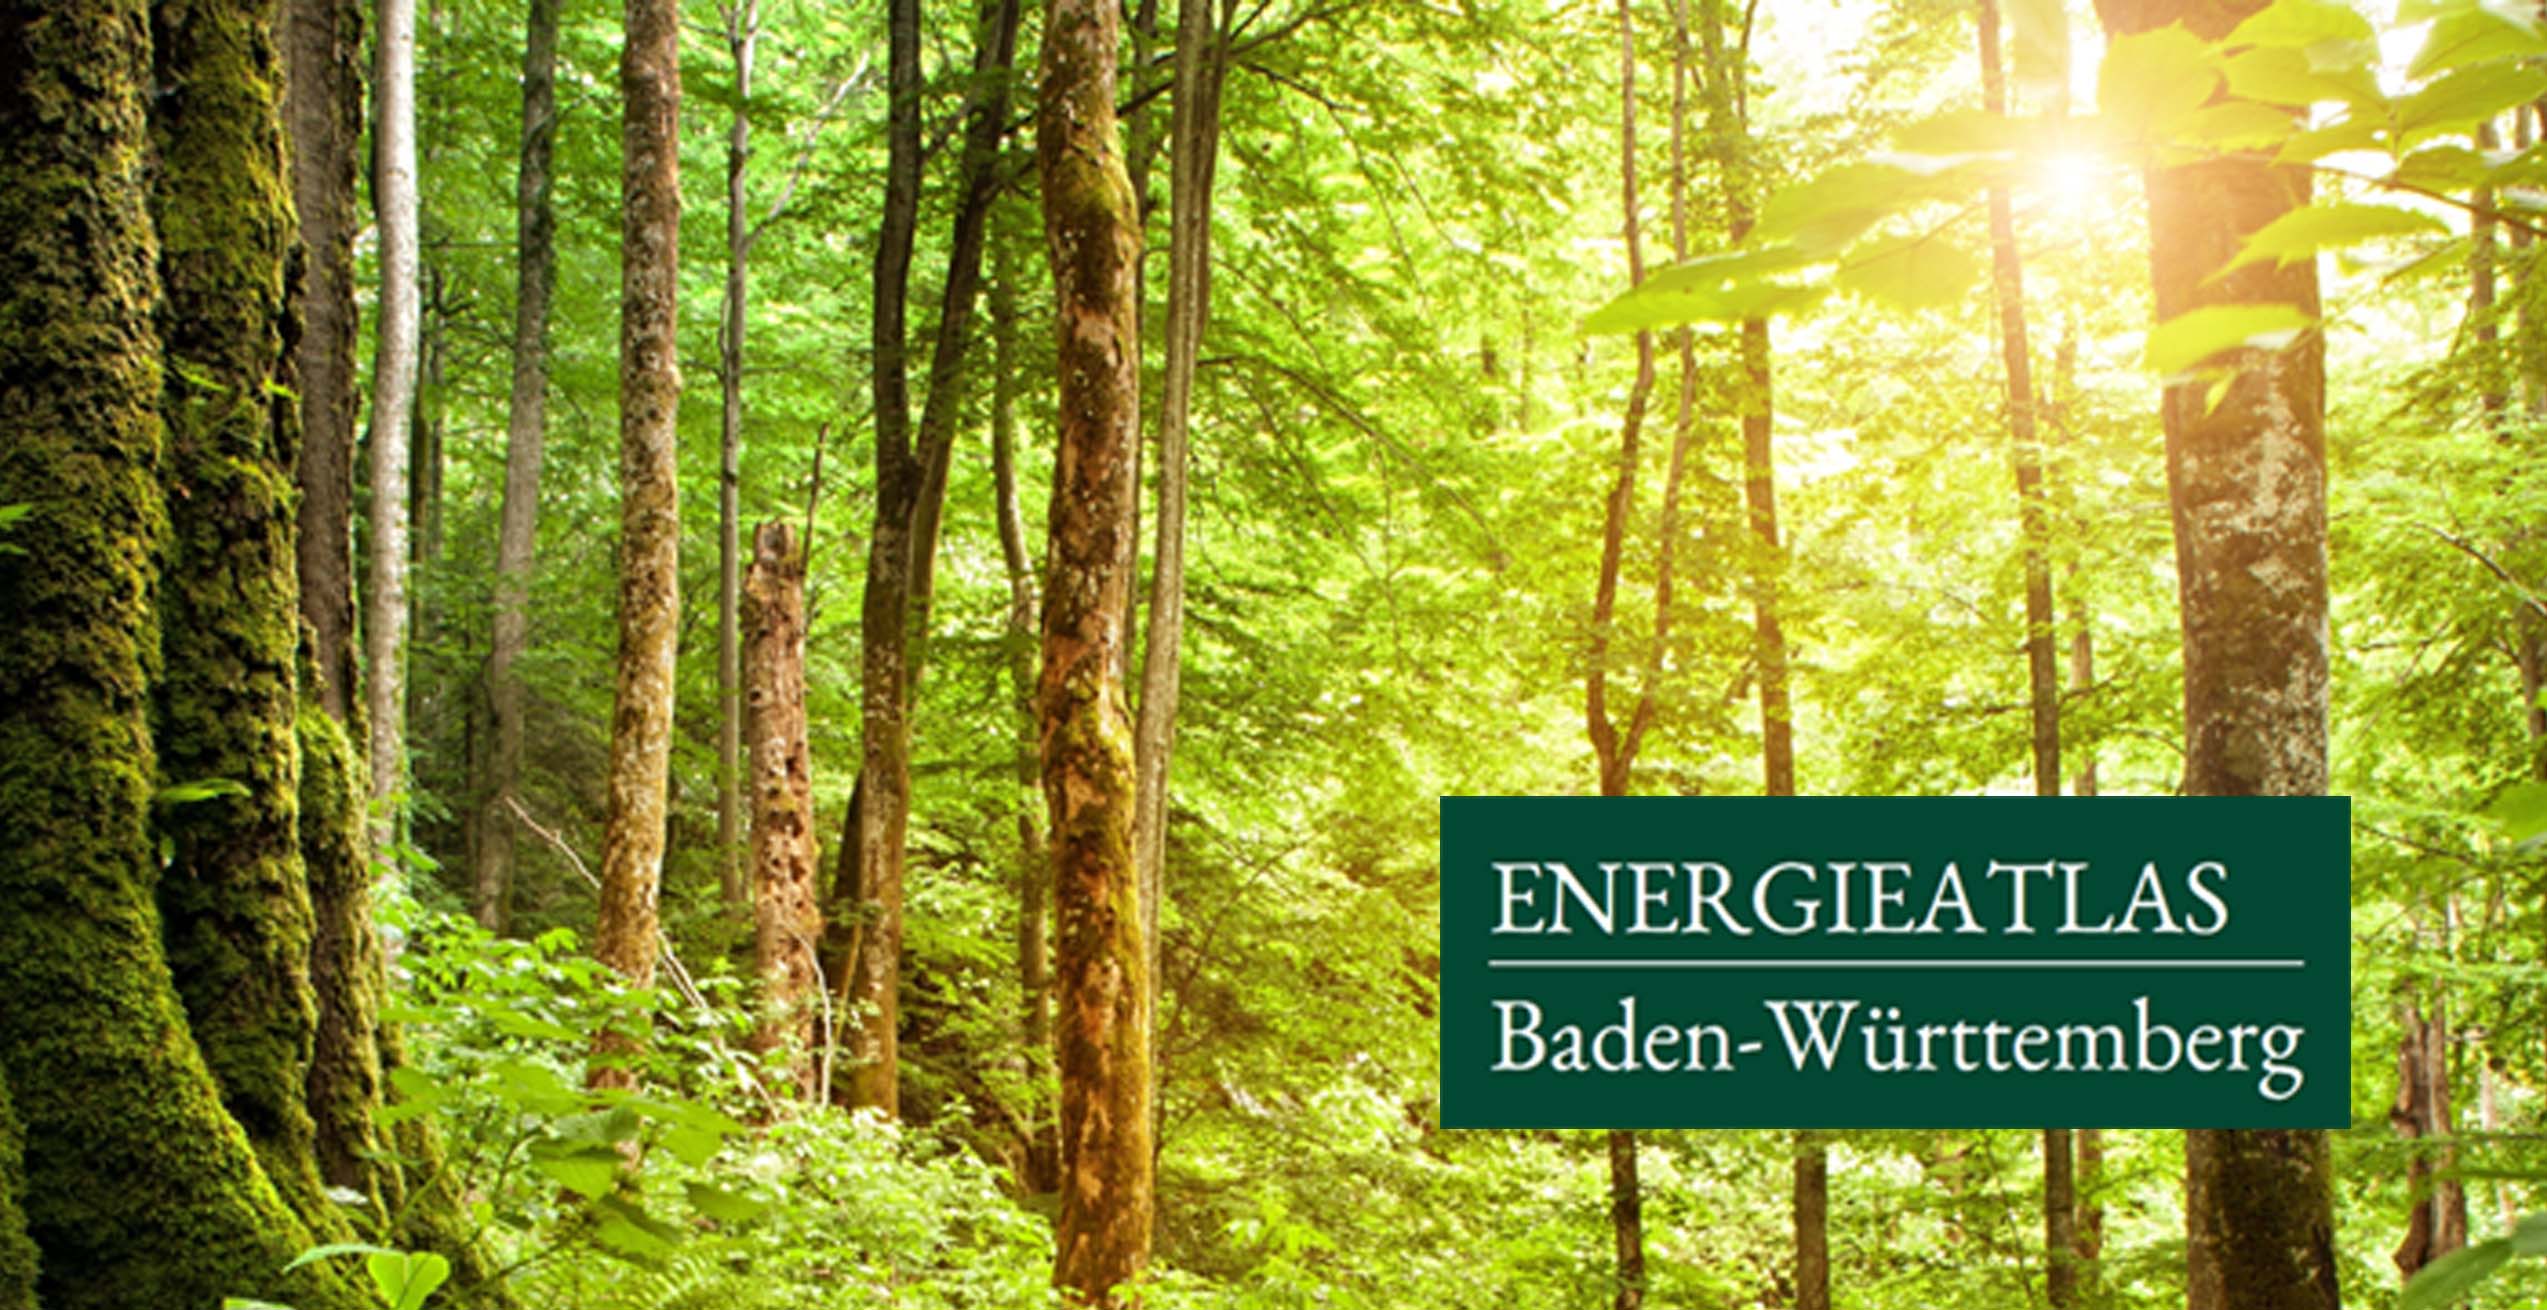 Bild aus dem Online-Angebot "Energieatlas Baden-Württemberg"']